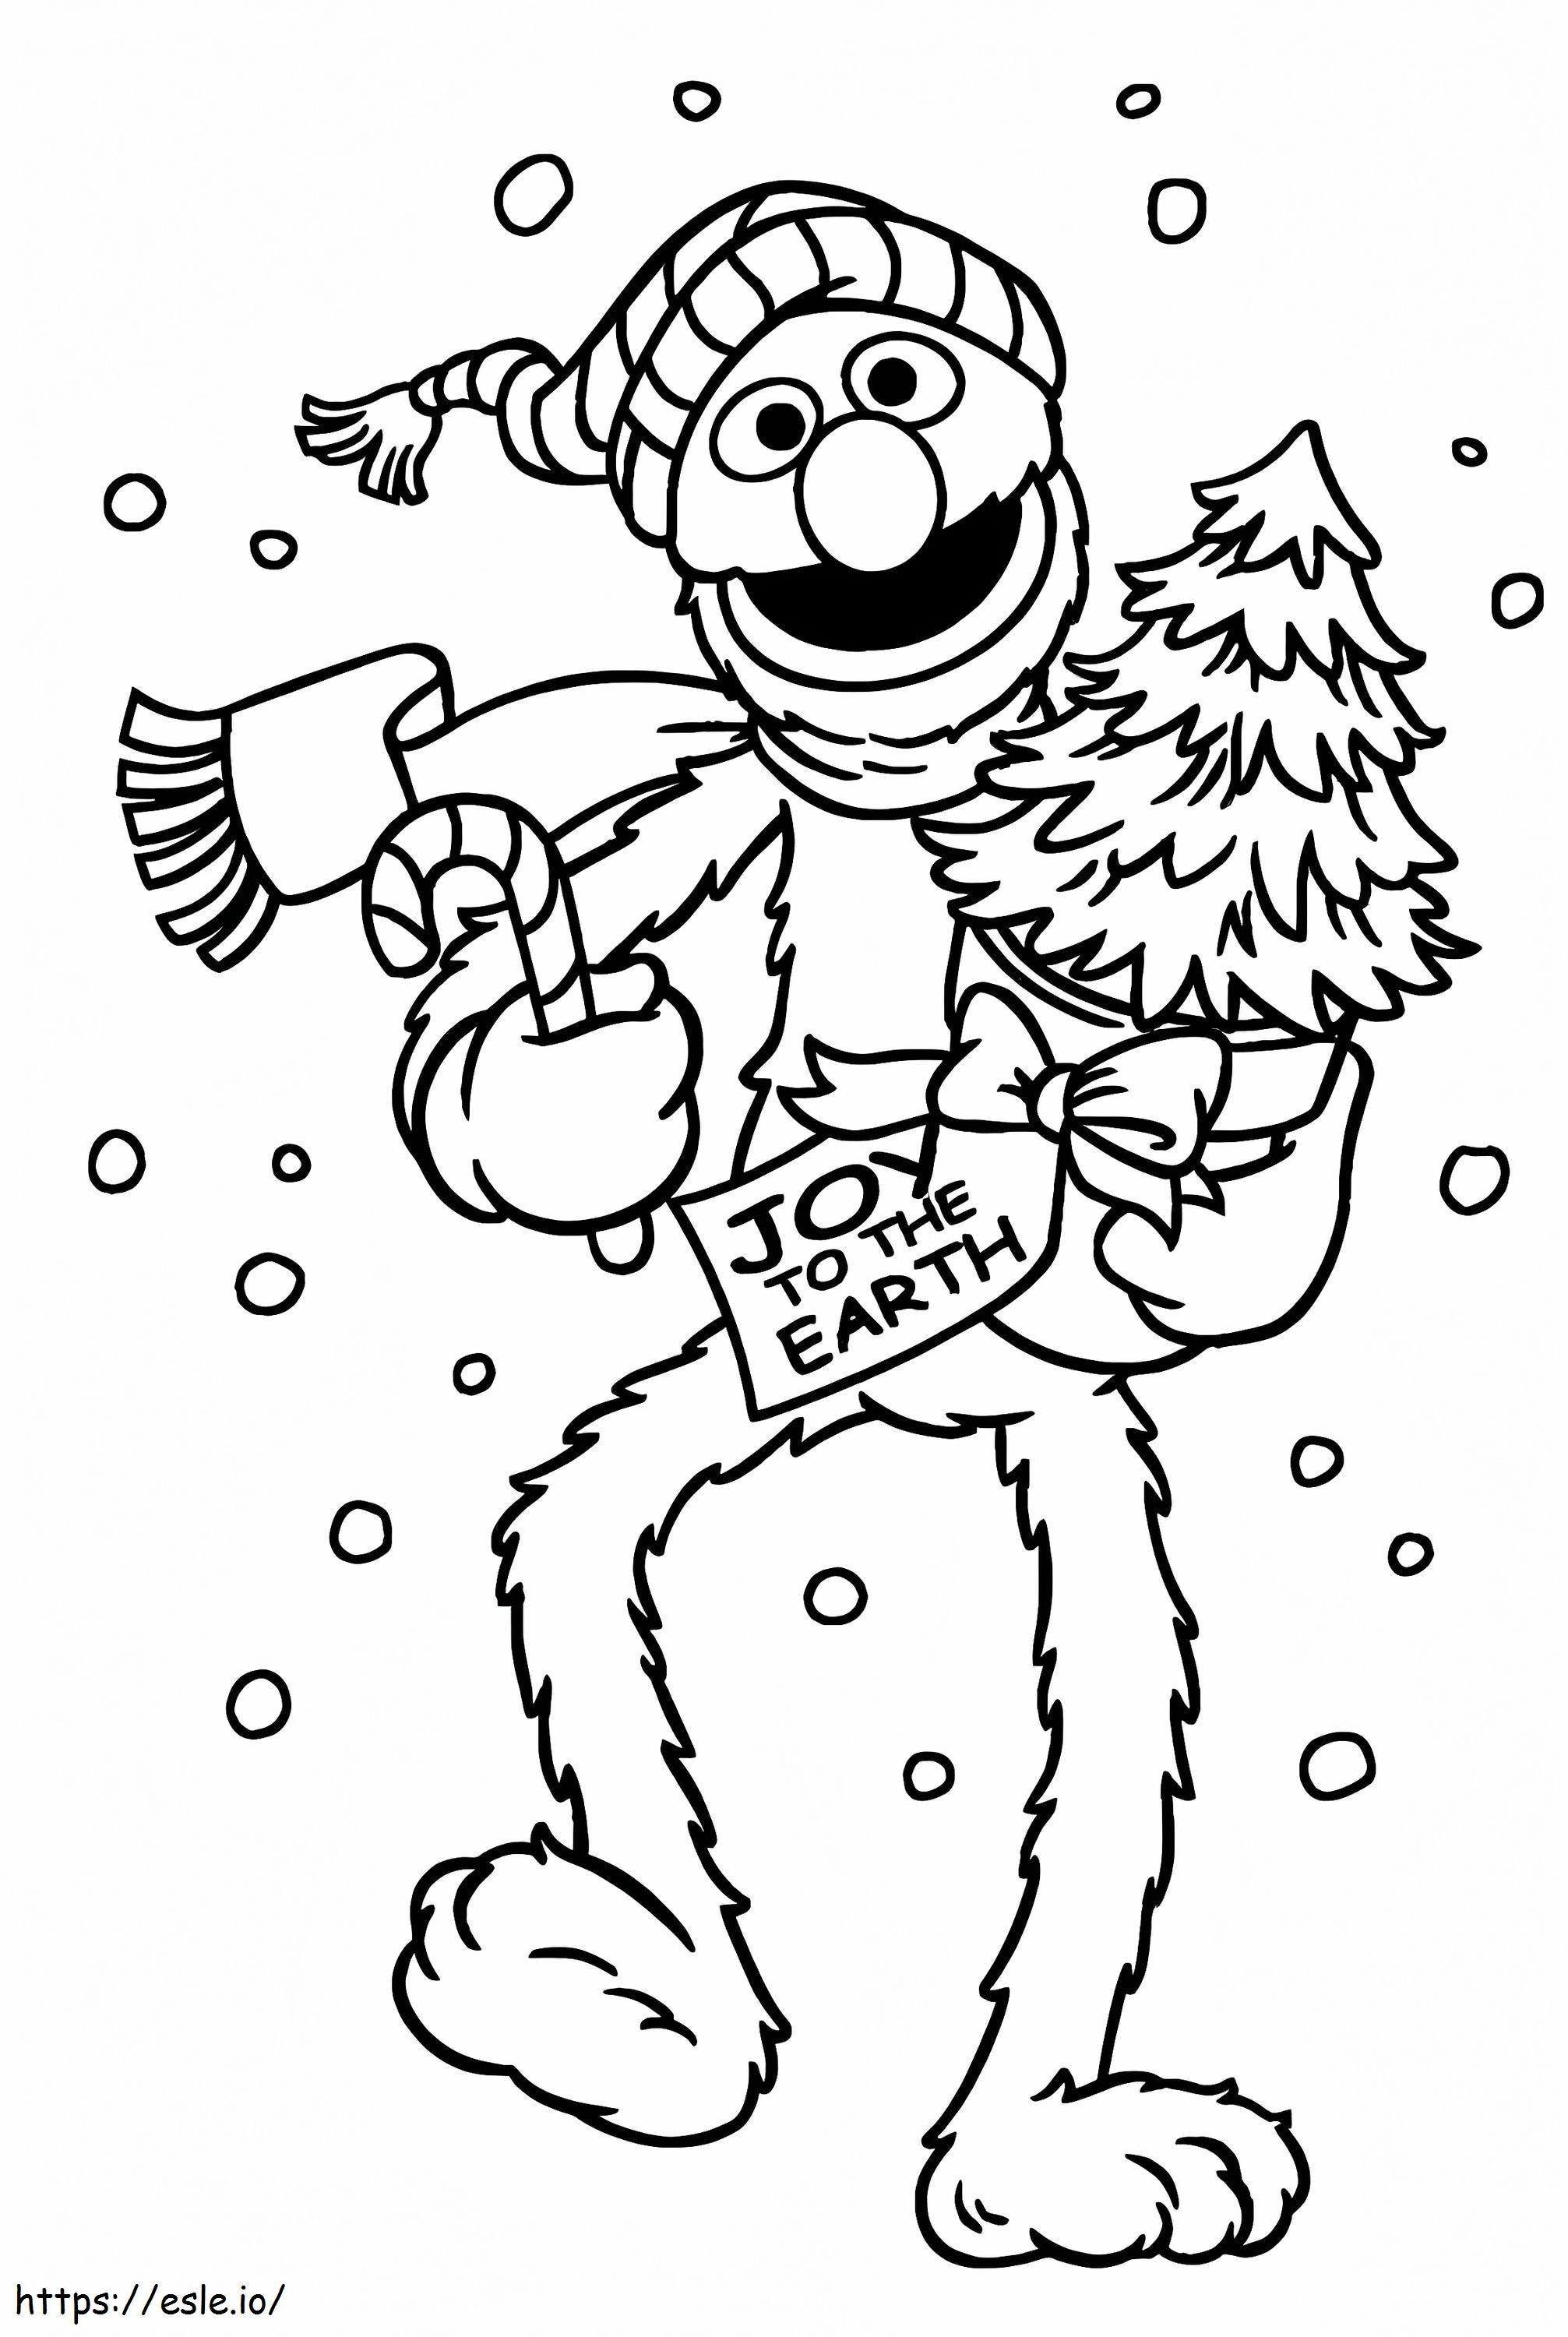 Coloriage Grover à Noël à imprimer dessin